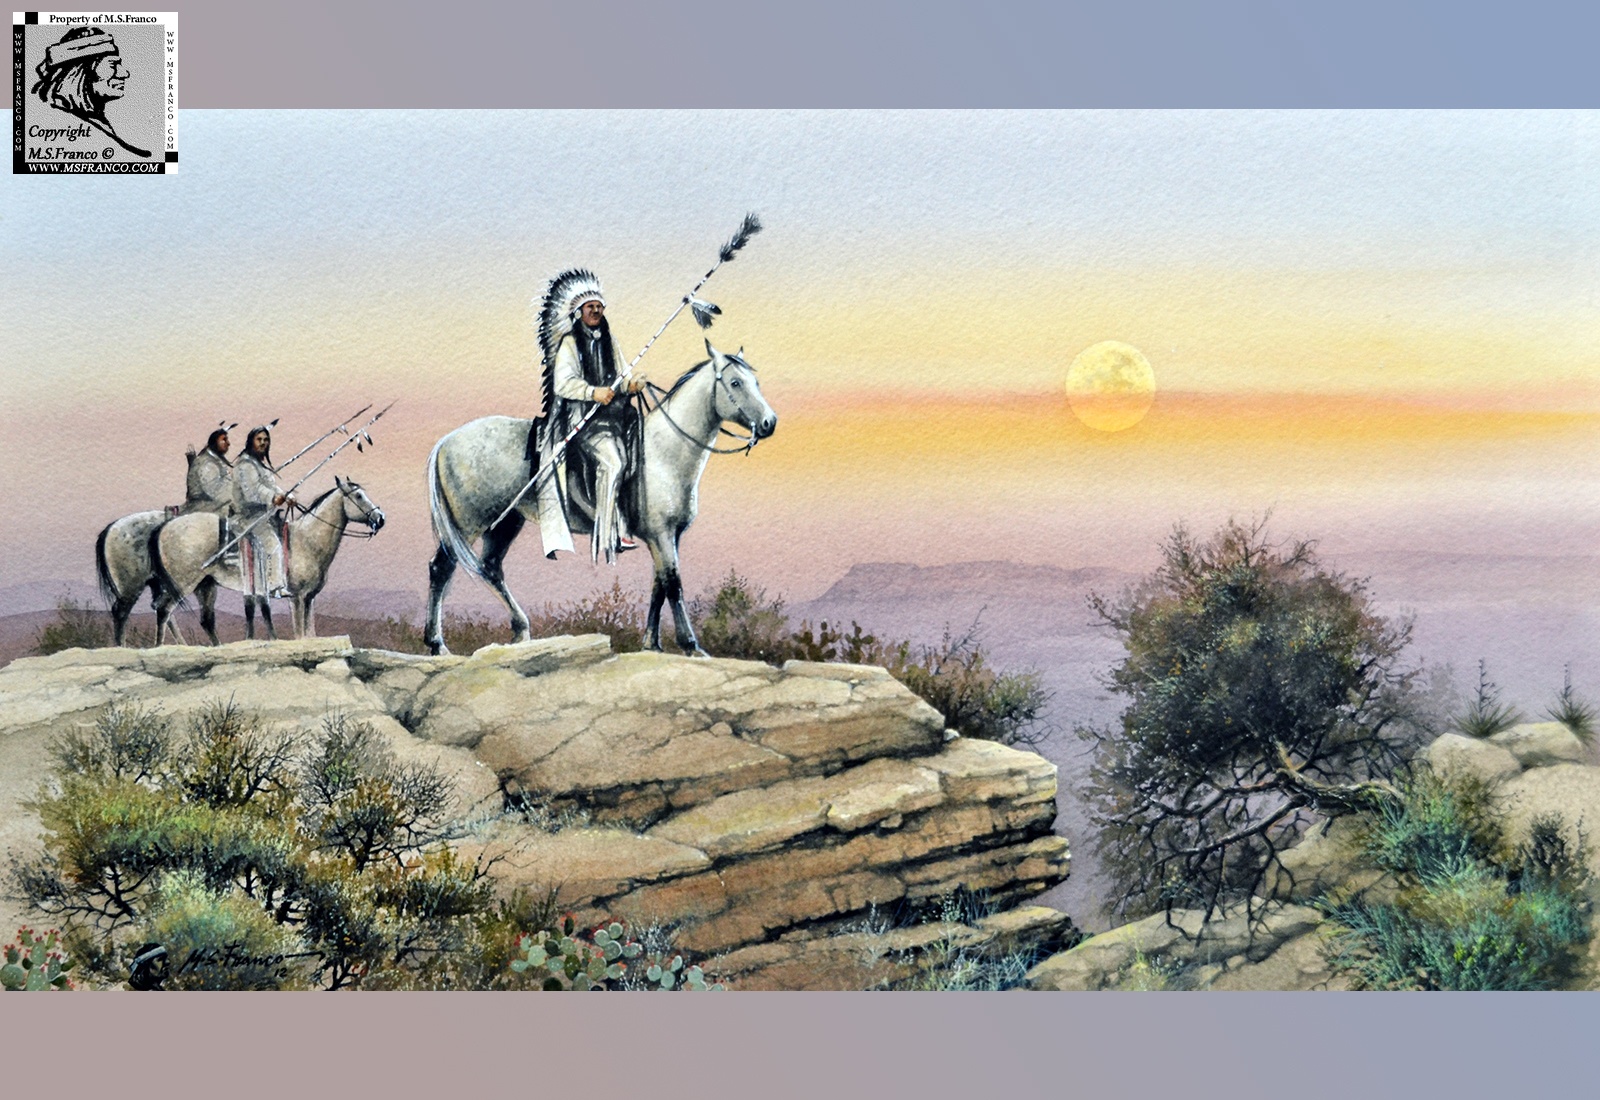 " Comanche Moon "